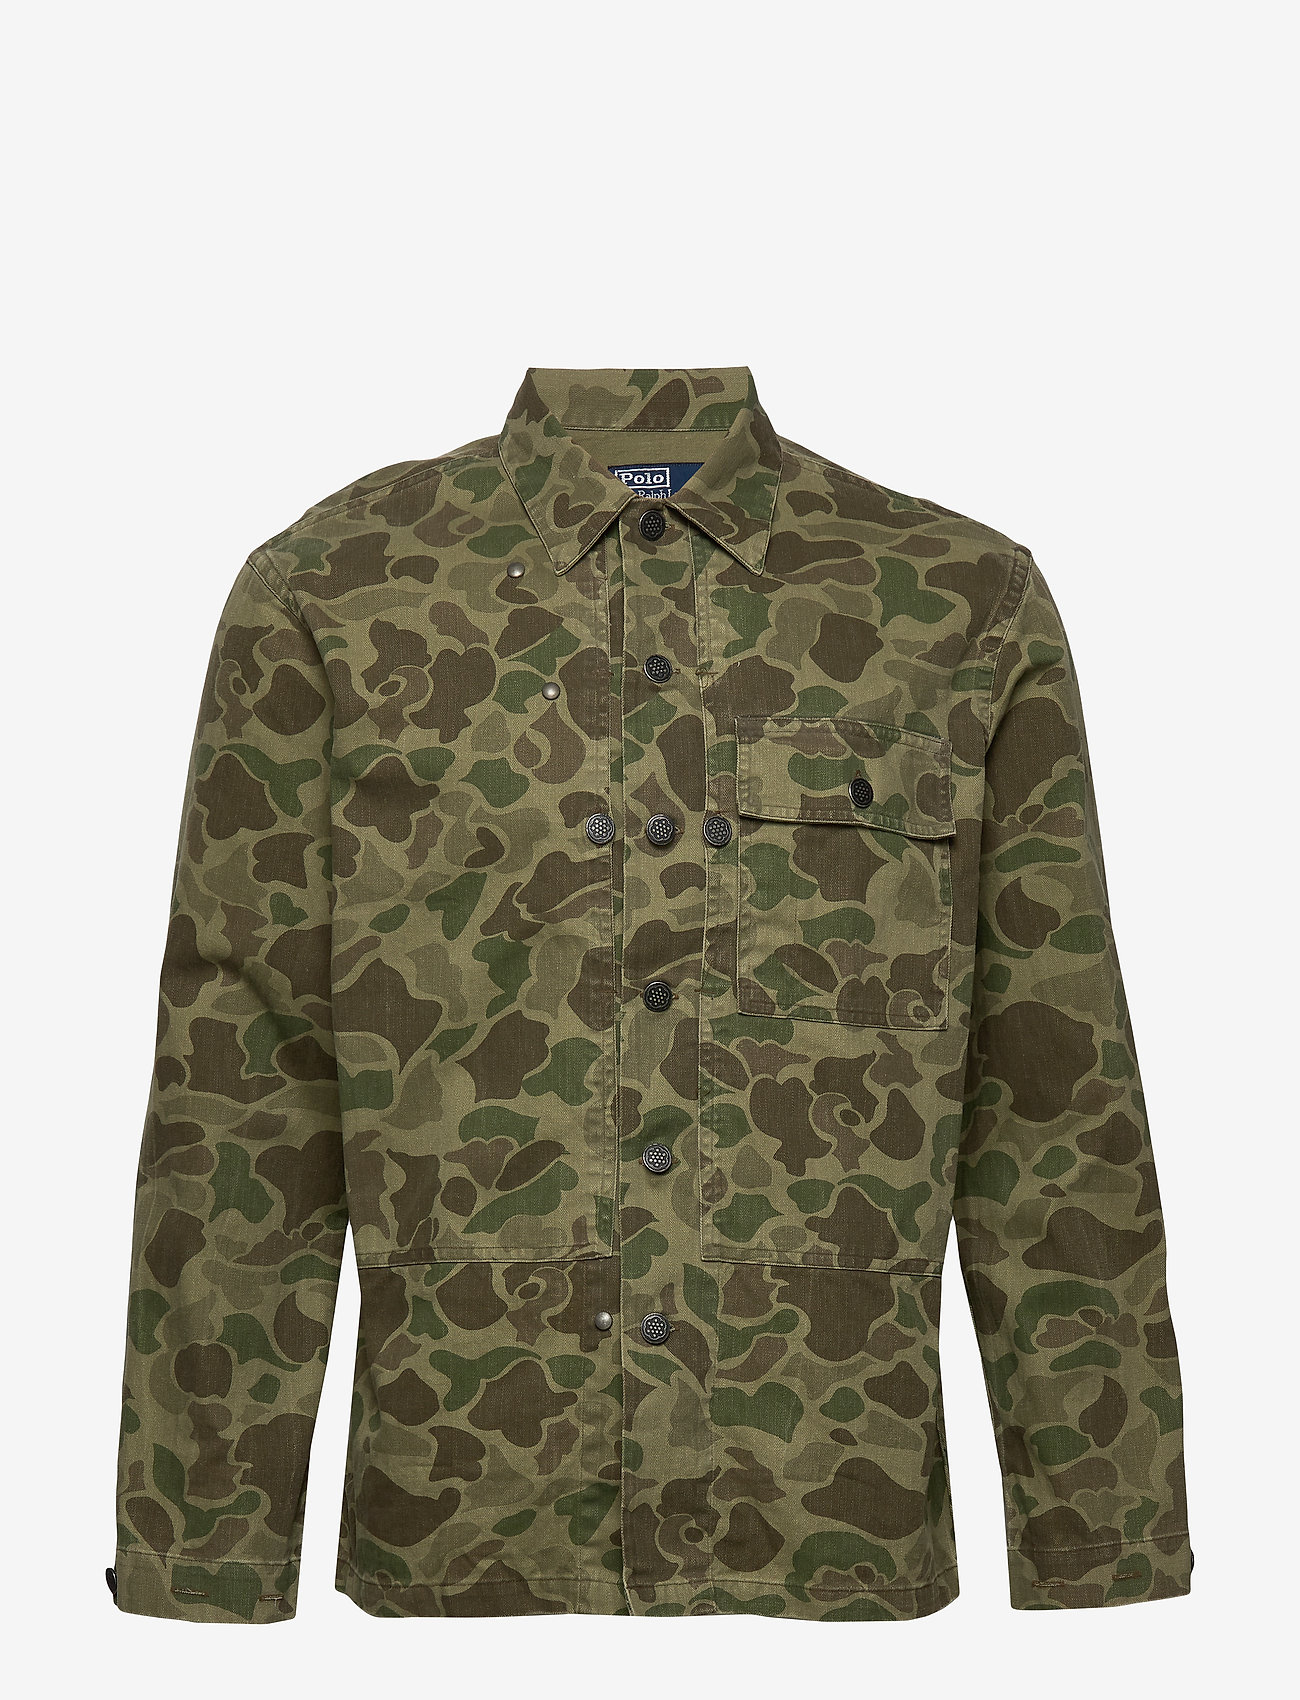 ralph lauren camouflage shirt